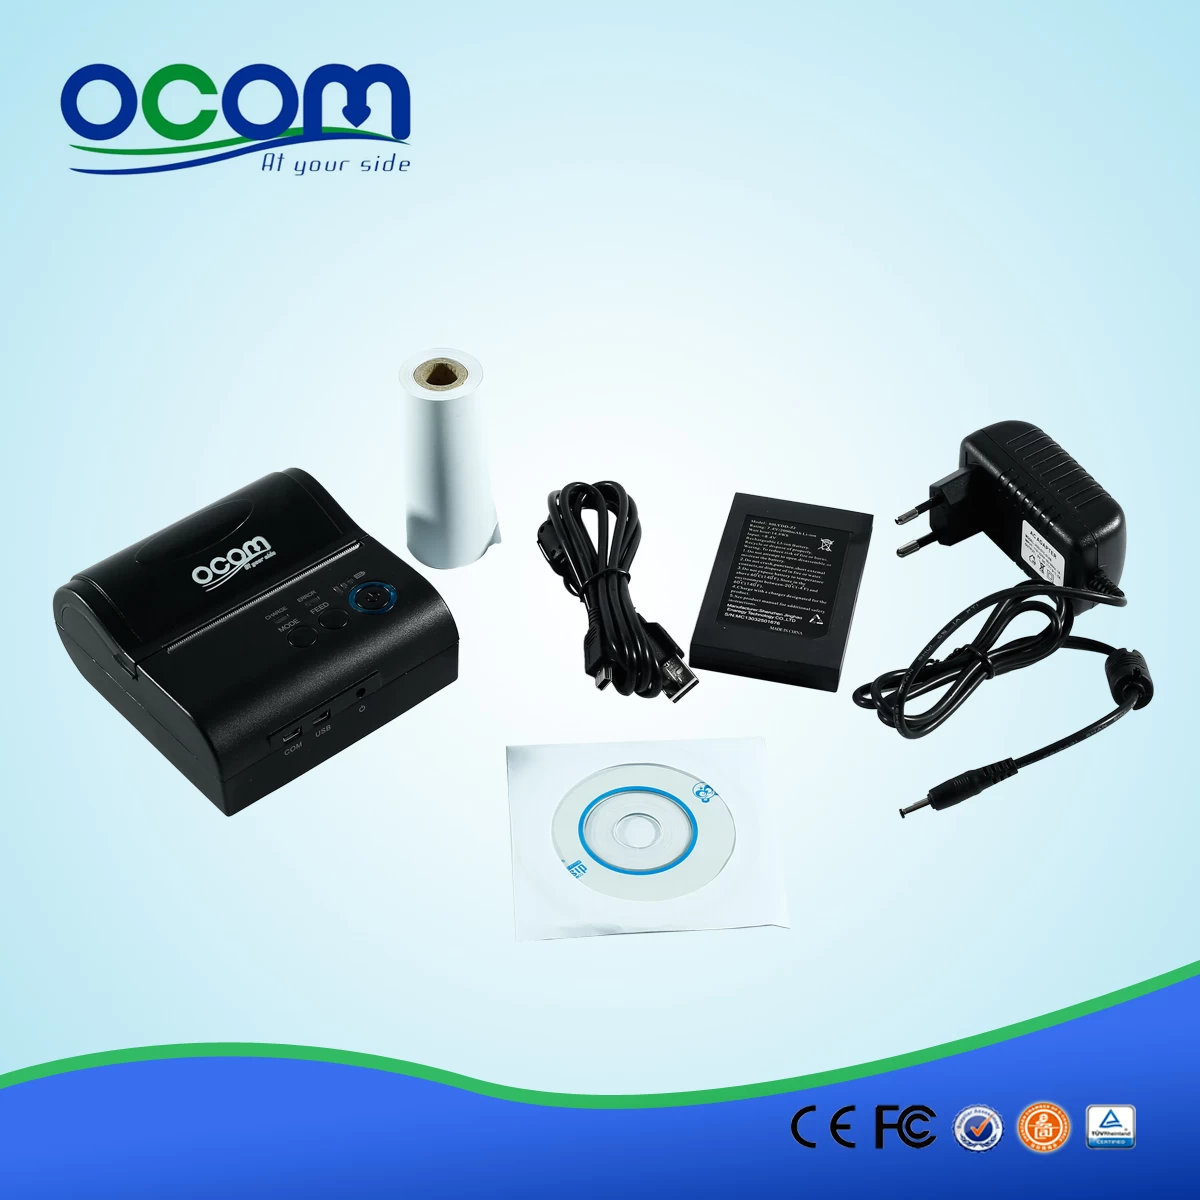 OCPP-M082: OCOM Hot selling cheap 80mm  thermal receipt printer